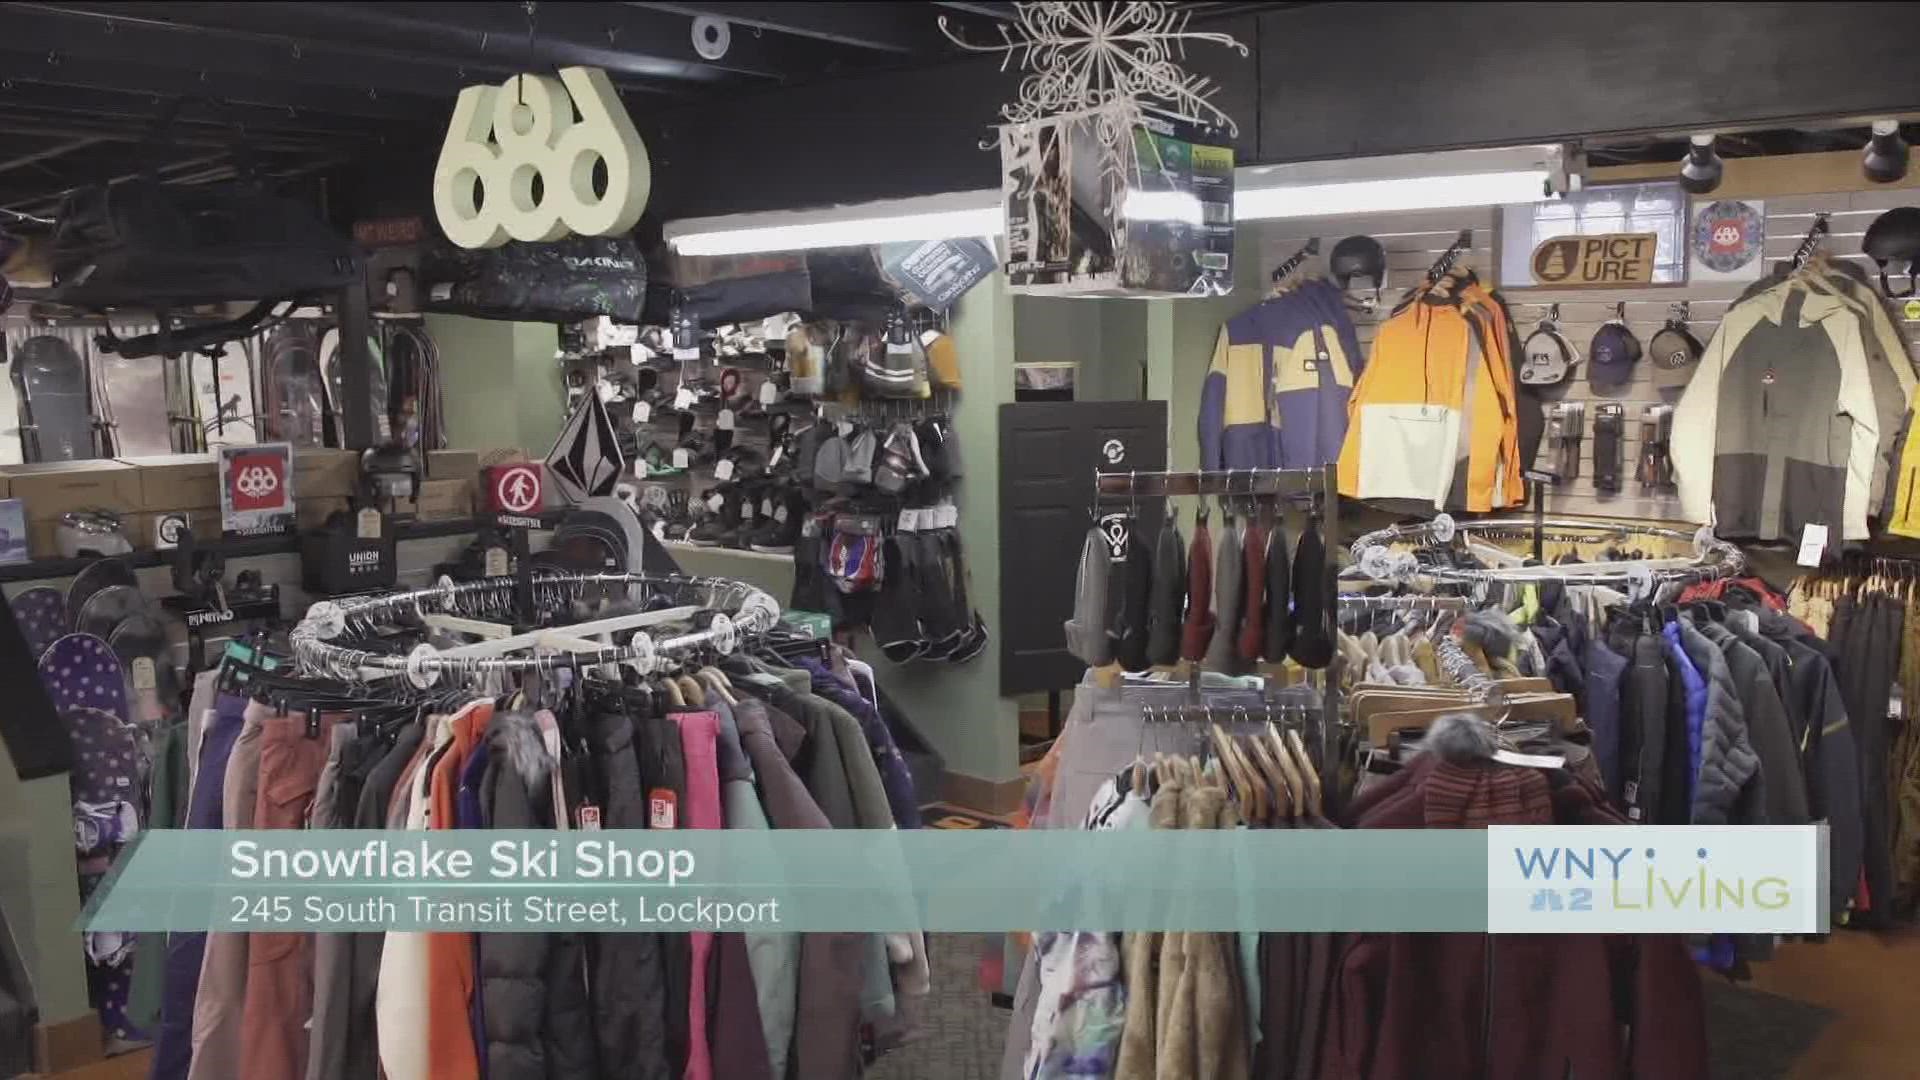 WNY Living - December 17 - Snowflake Ski Shop (THIS VIDEO IS SPONSORED BY SNOWFLAKE SKI SHOP)